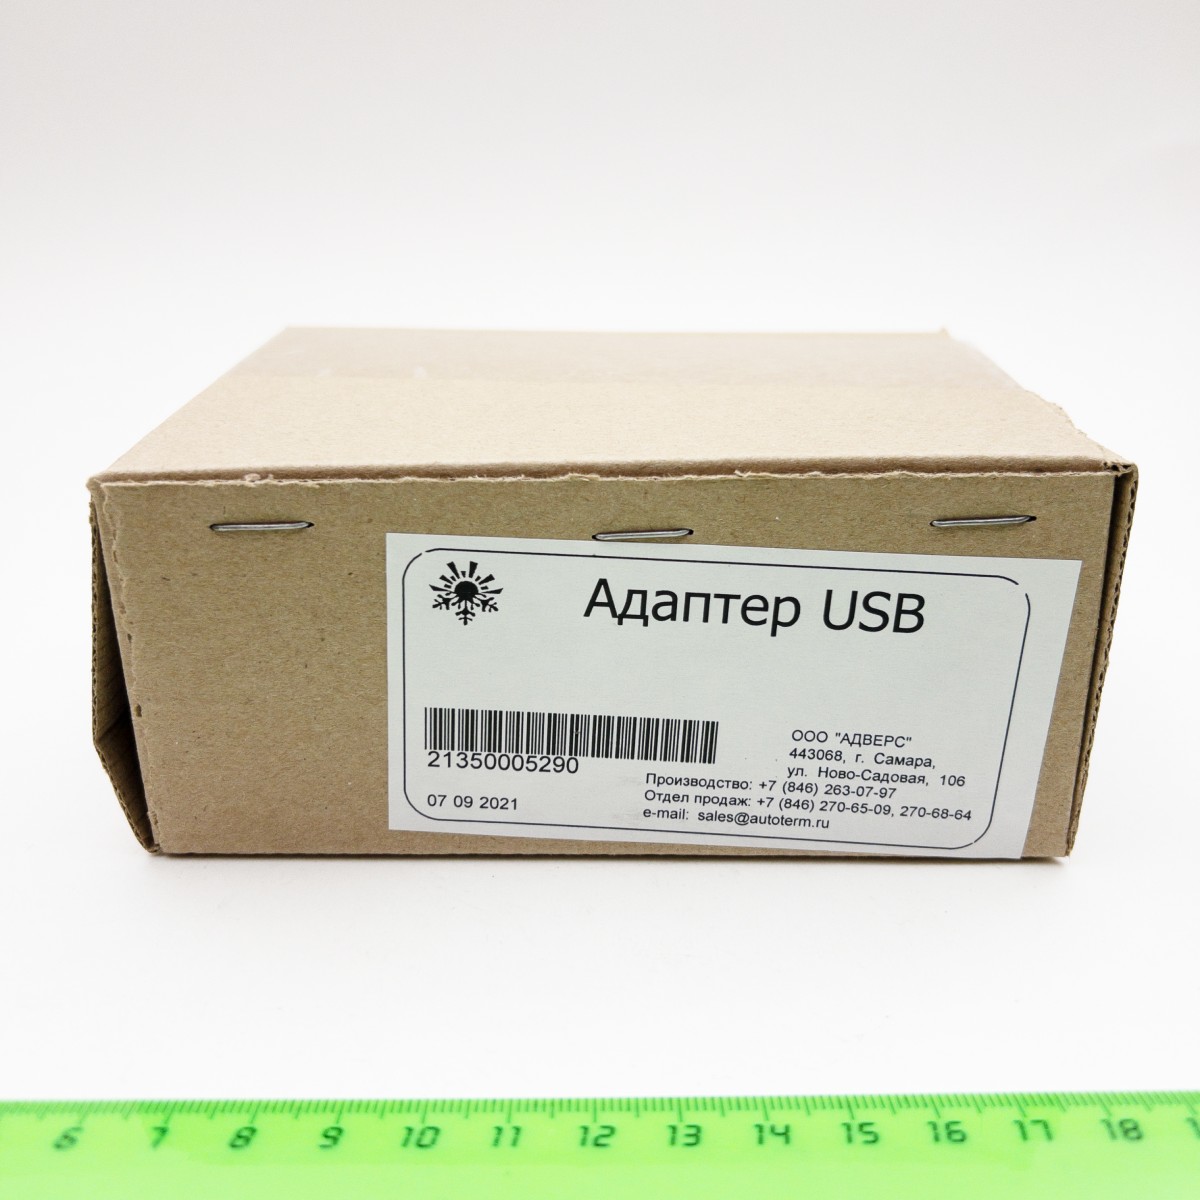 Адаптер USB (с переходниками) сб. 2135